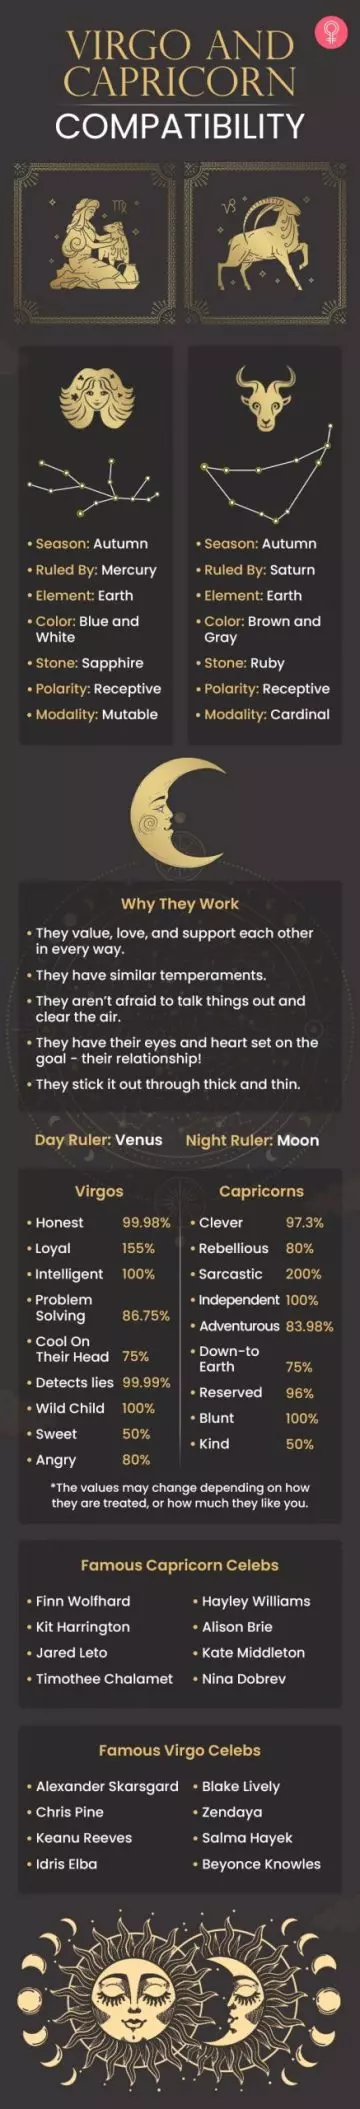 virgo and capricorn compatibility (infographic)